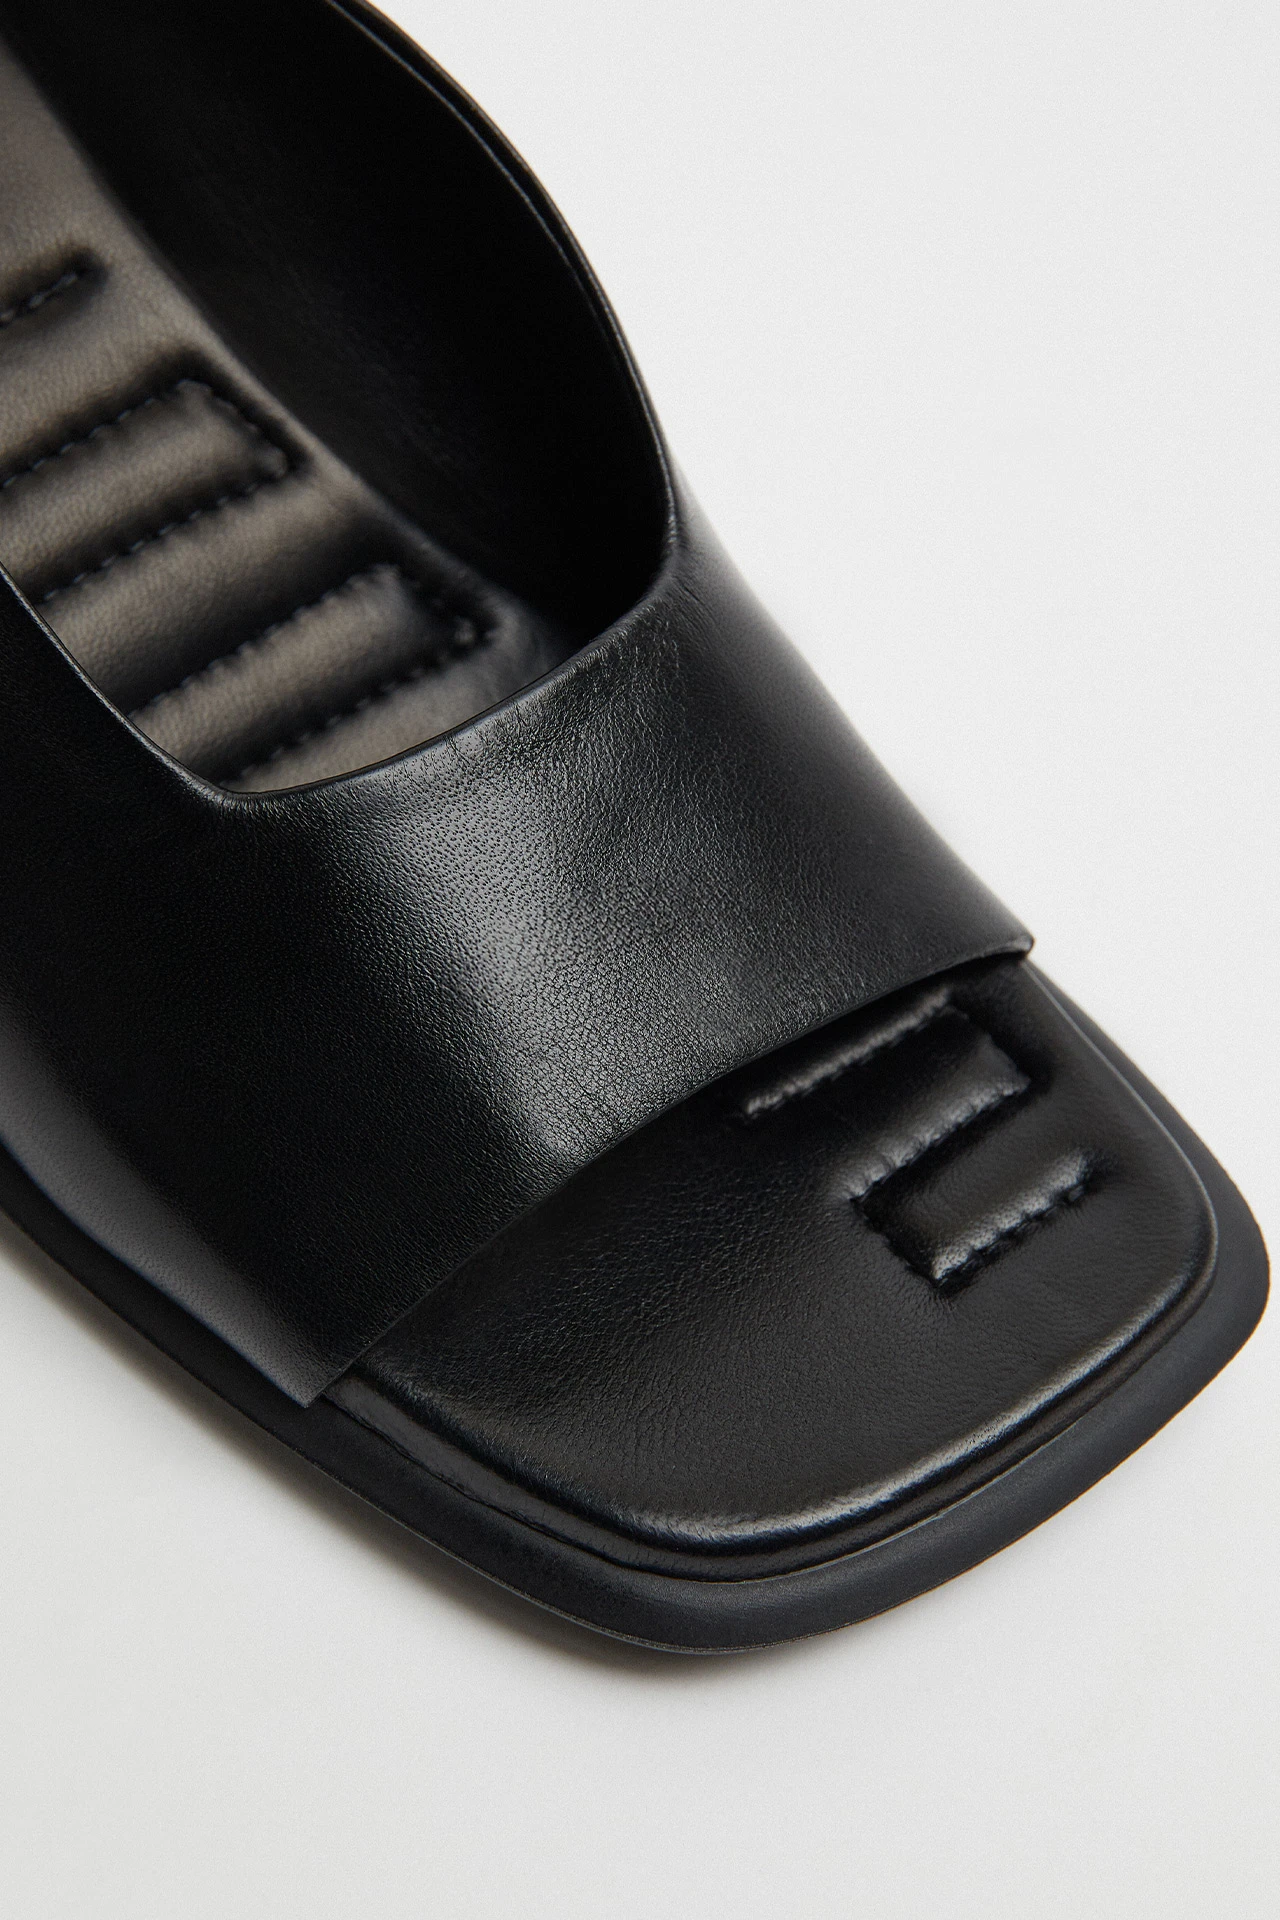 Miista-janaina-black-mule-sandals-04